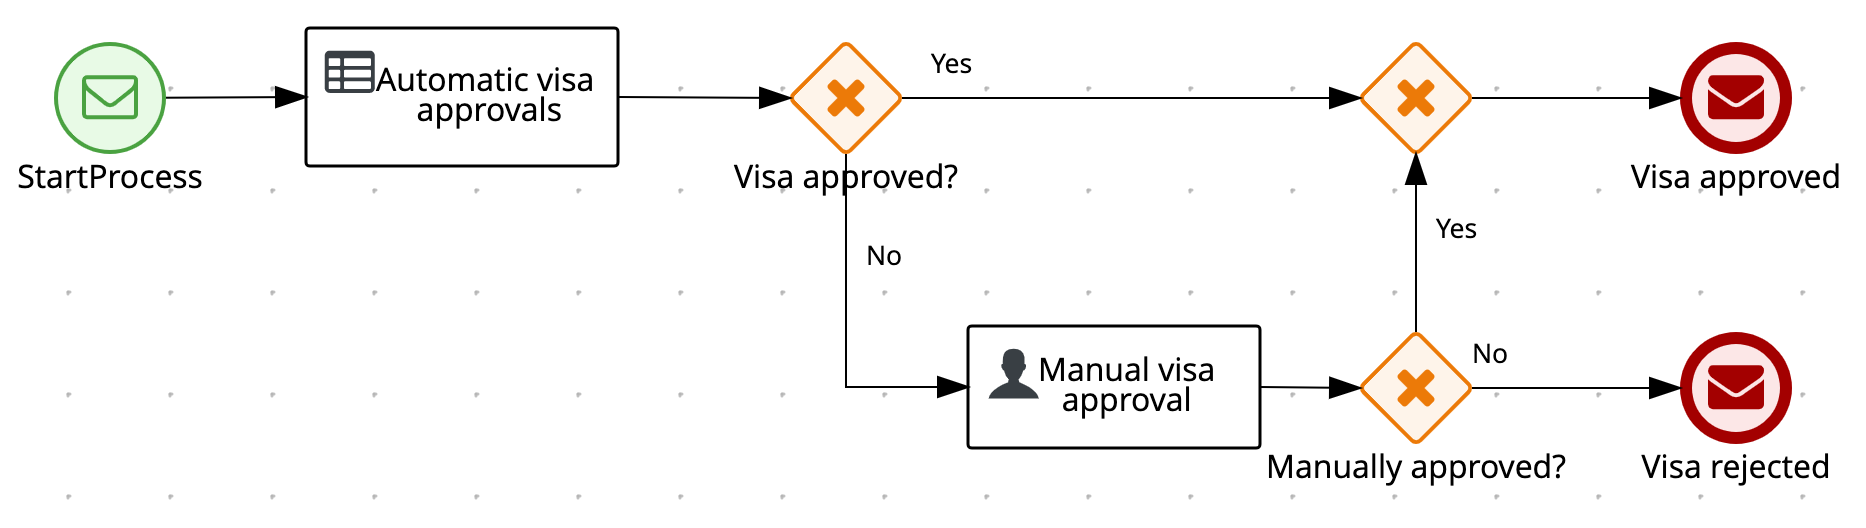 Image of visas example process